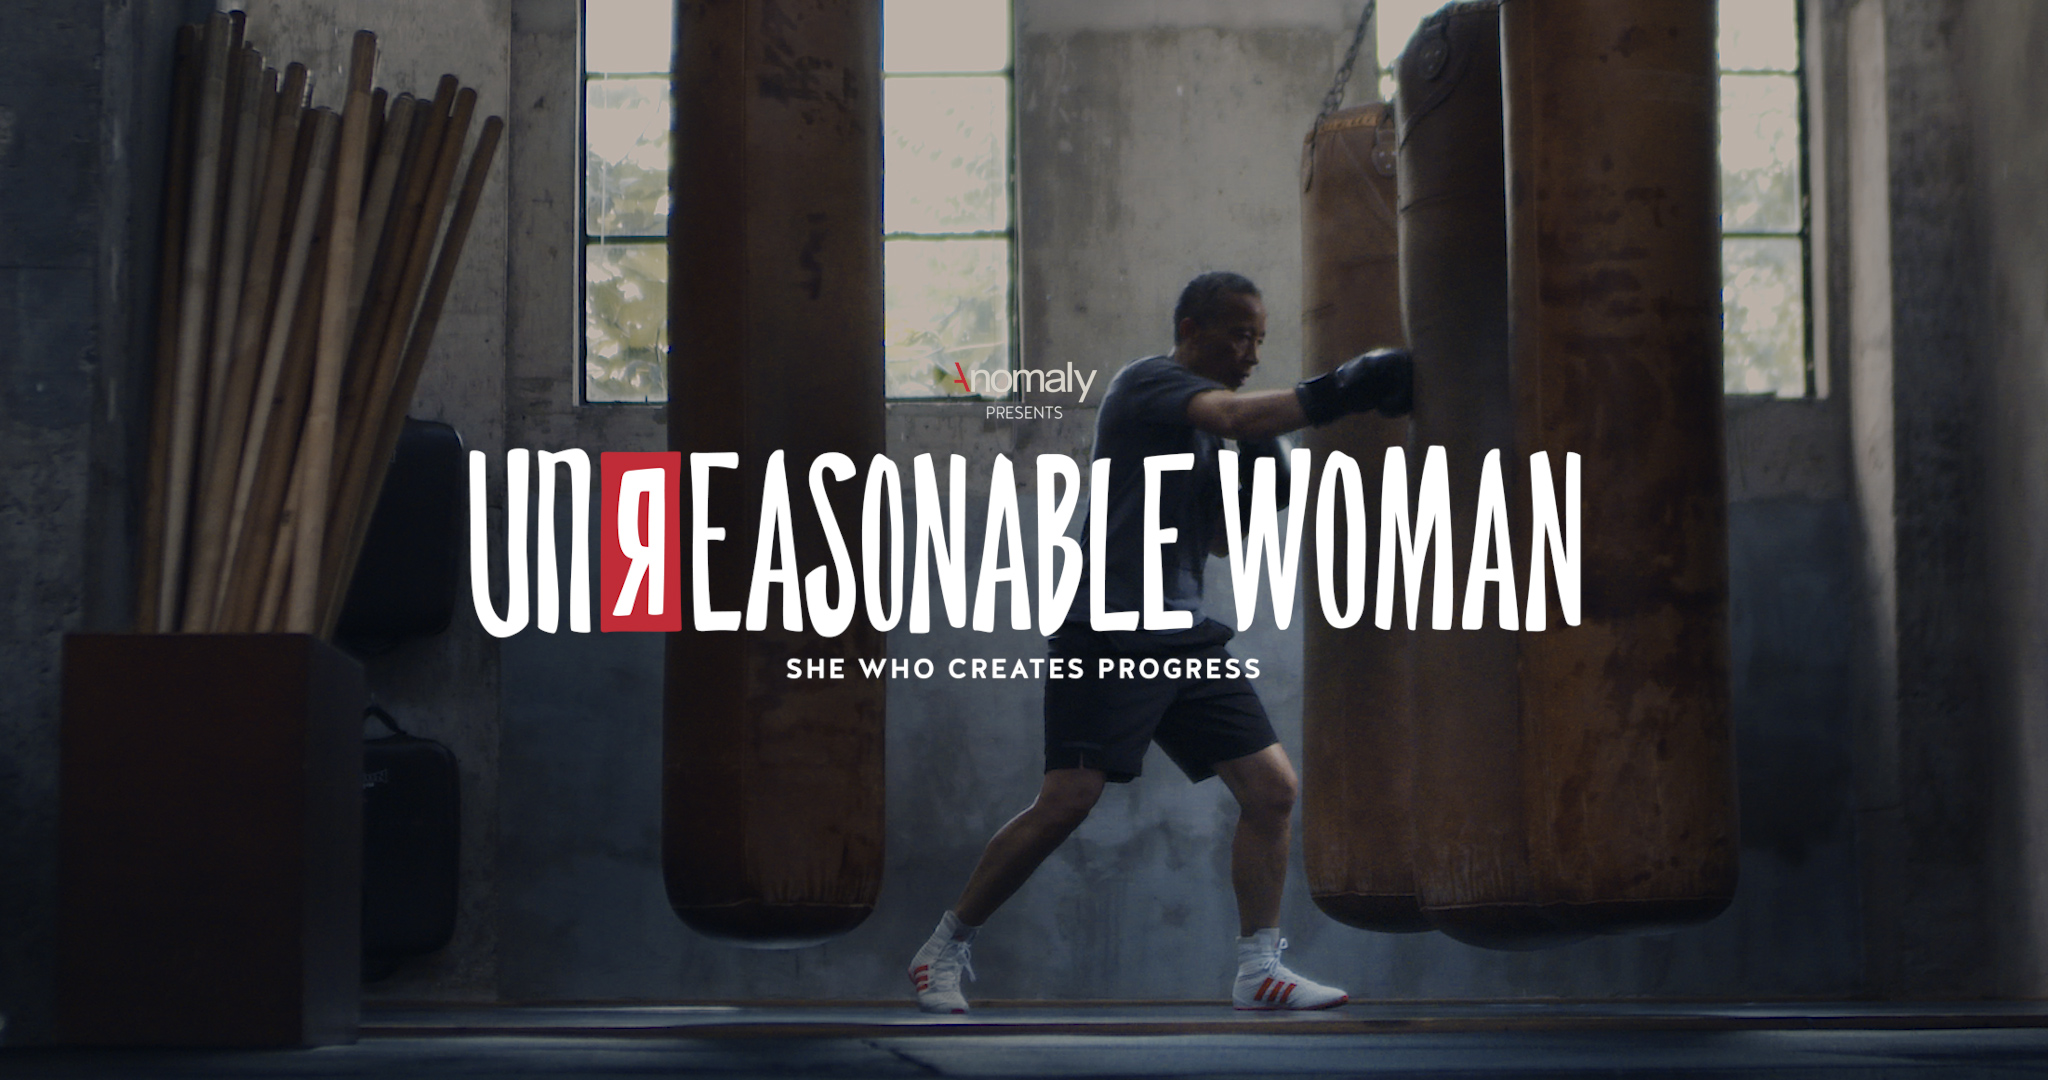 Anomaly携手Unreasonable Studios在国际妇女节推出全新纪录片